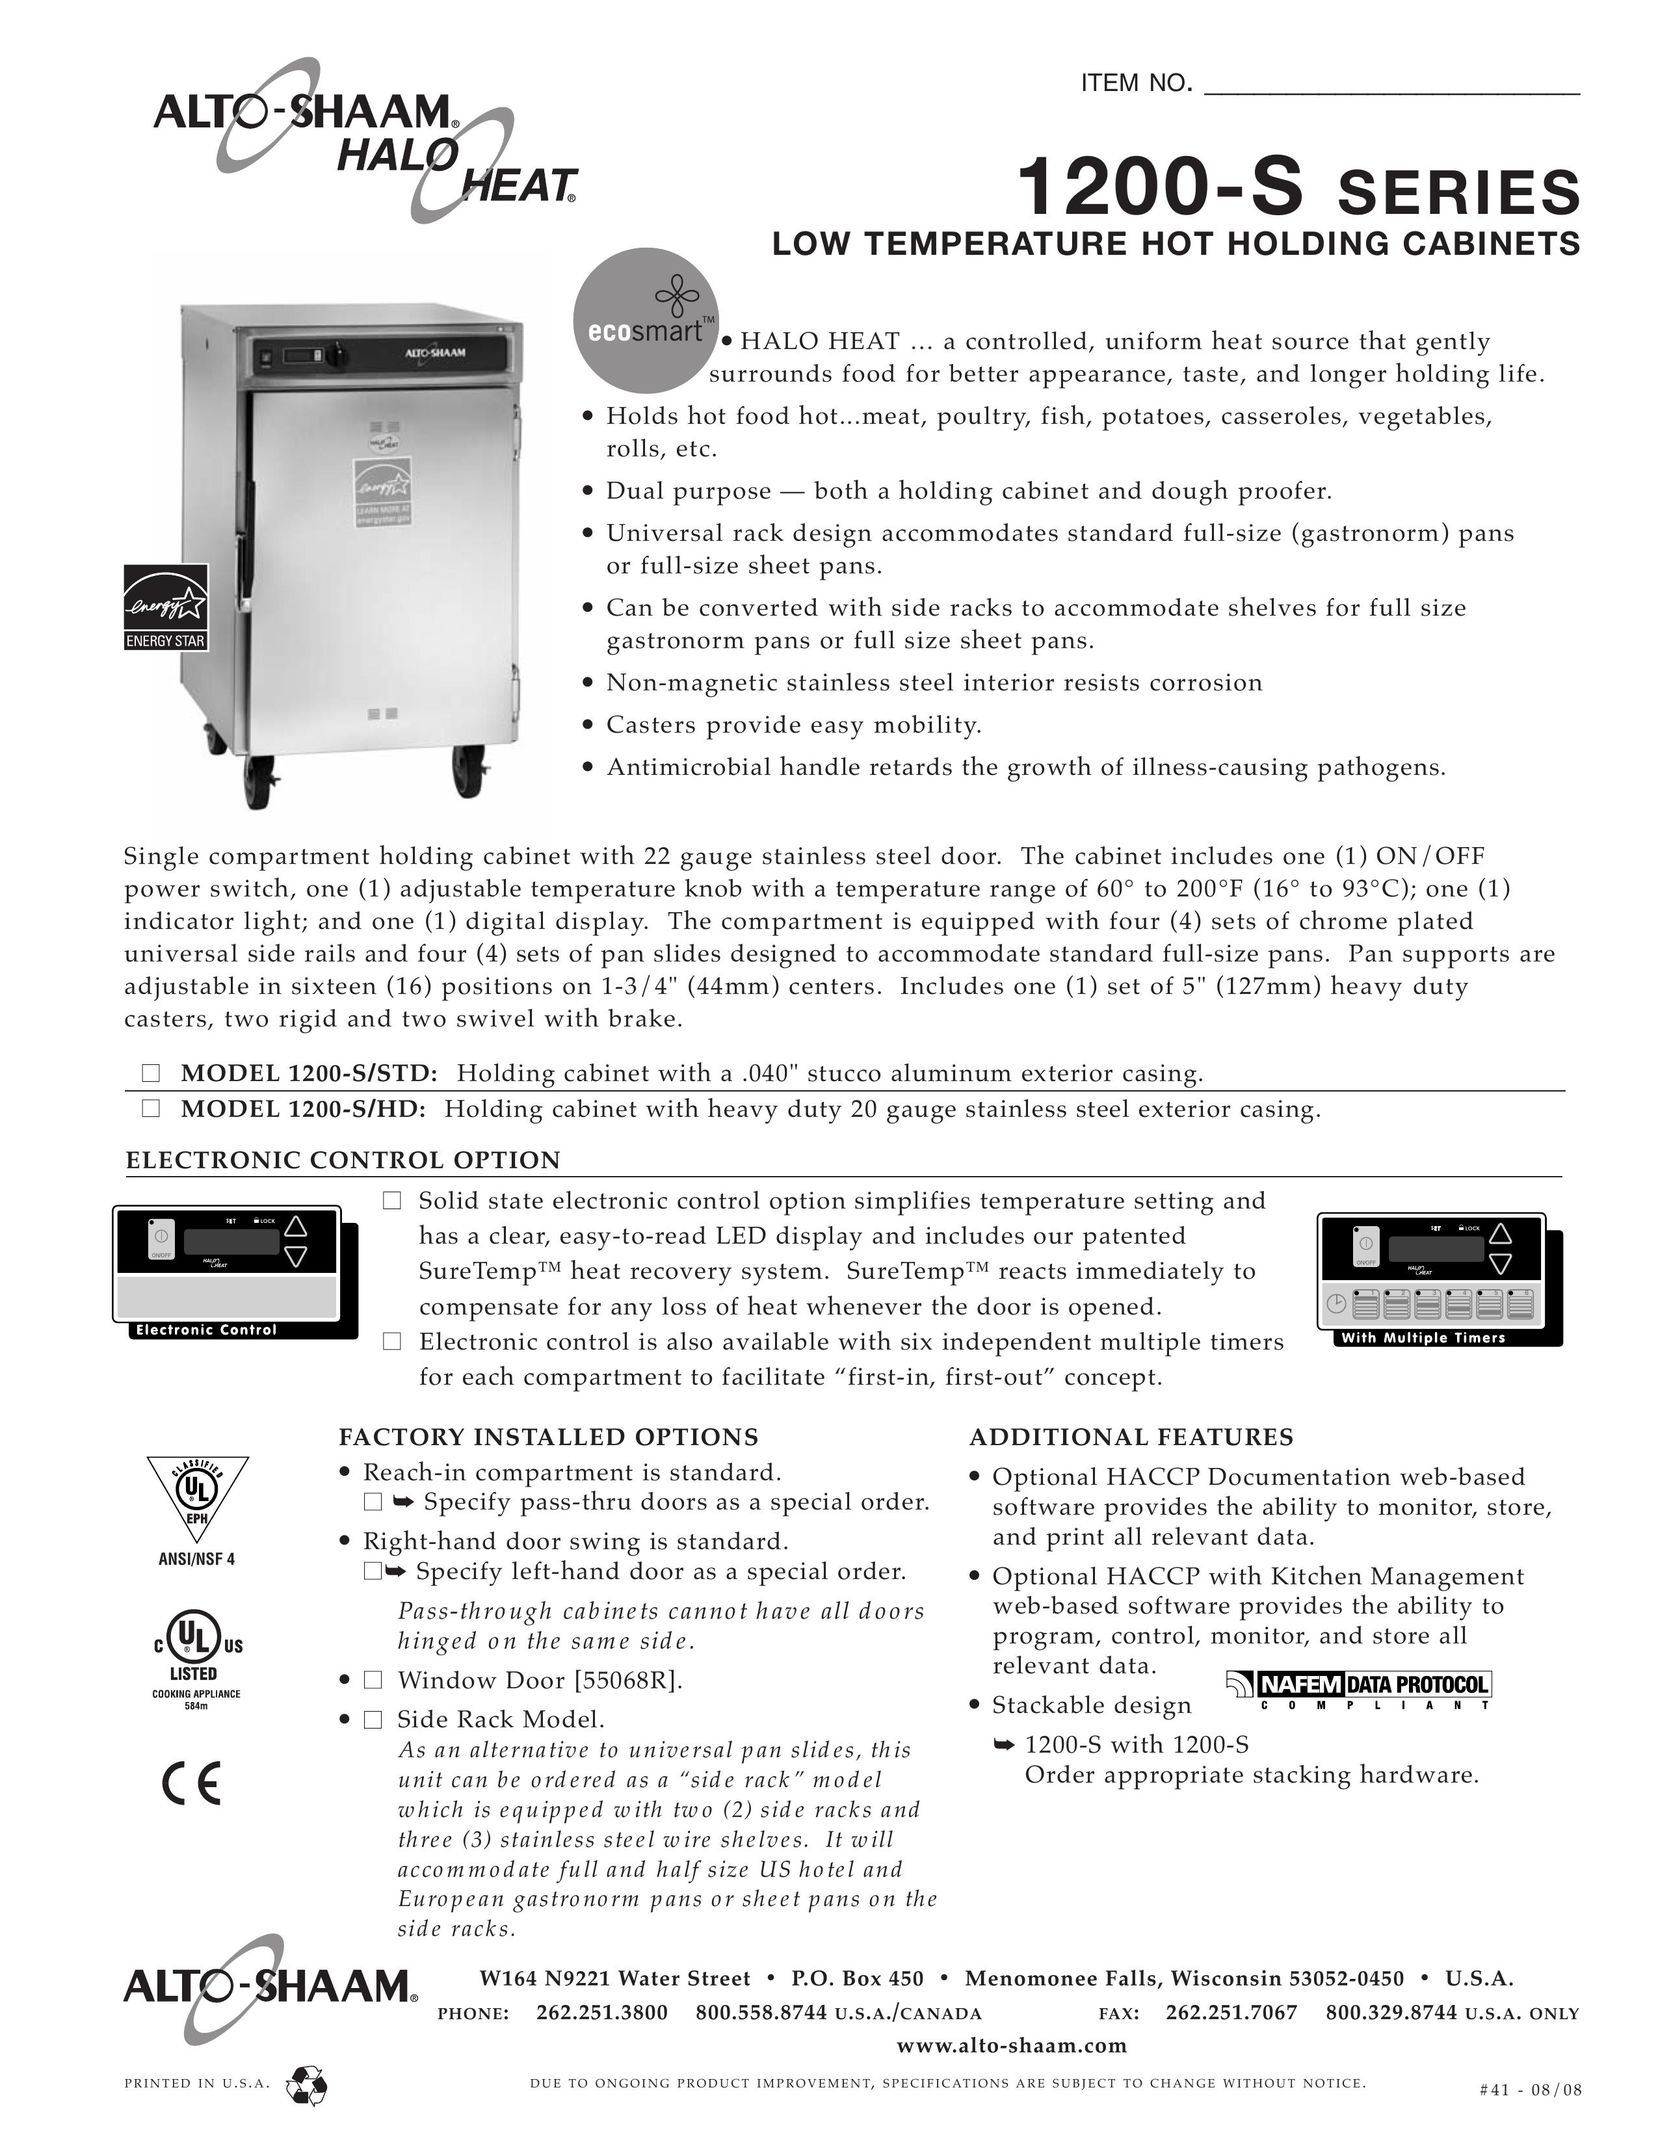 Alto-Shaam 1200-S/HD Oven User Manual